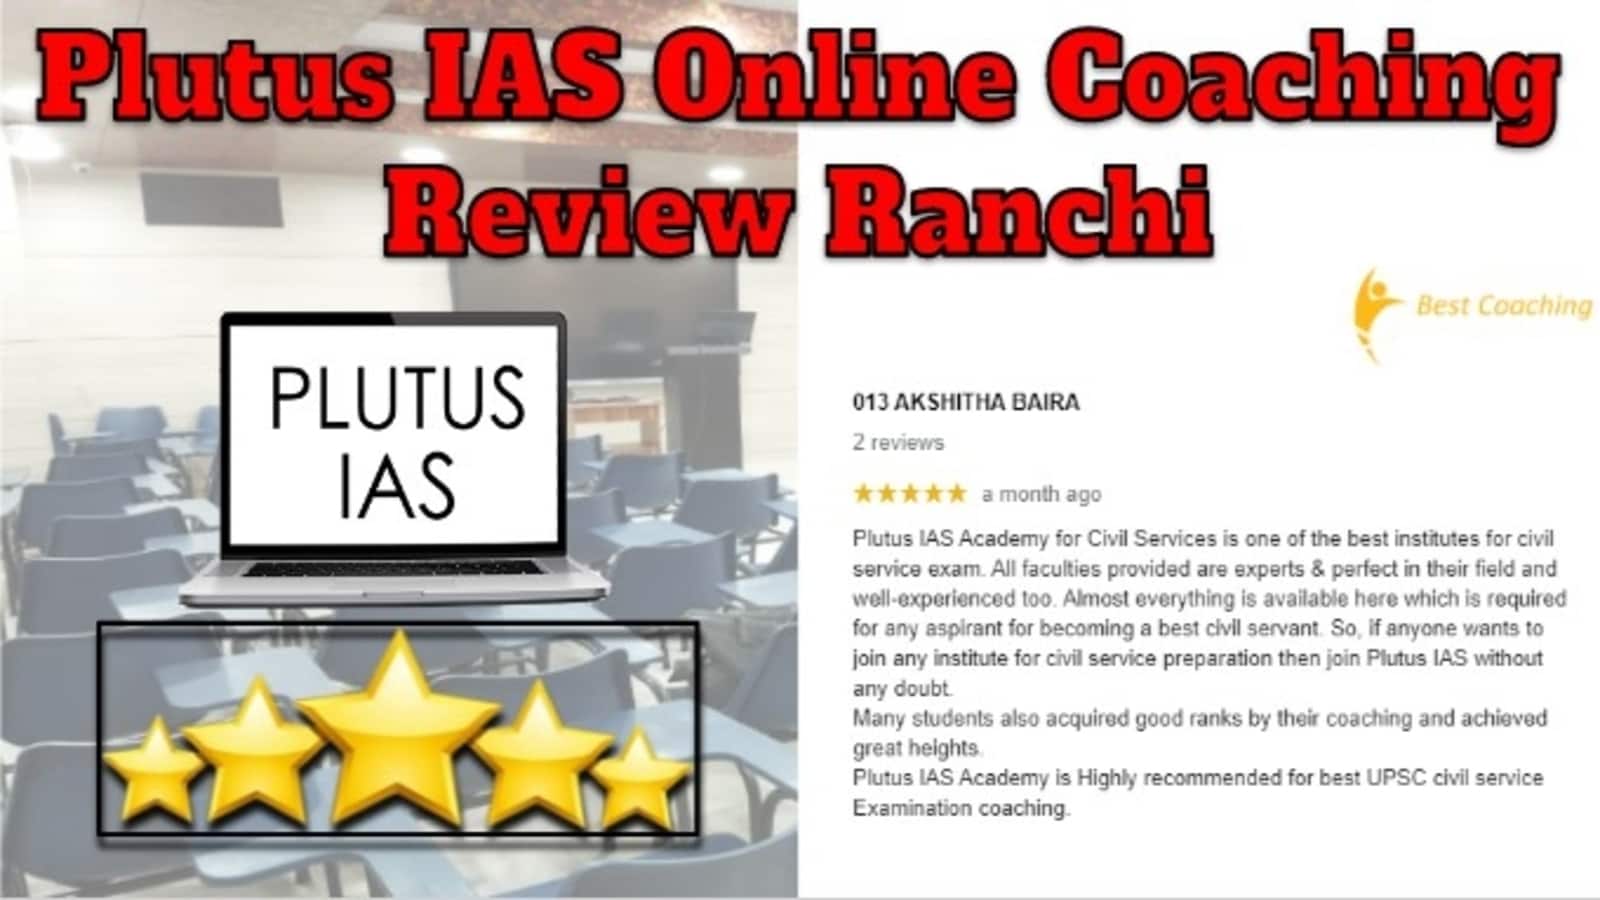 Plutus IAS Online Coaching Review Ranchi